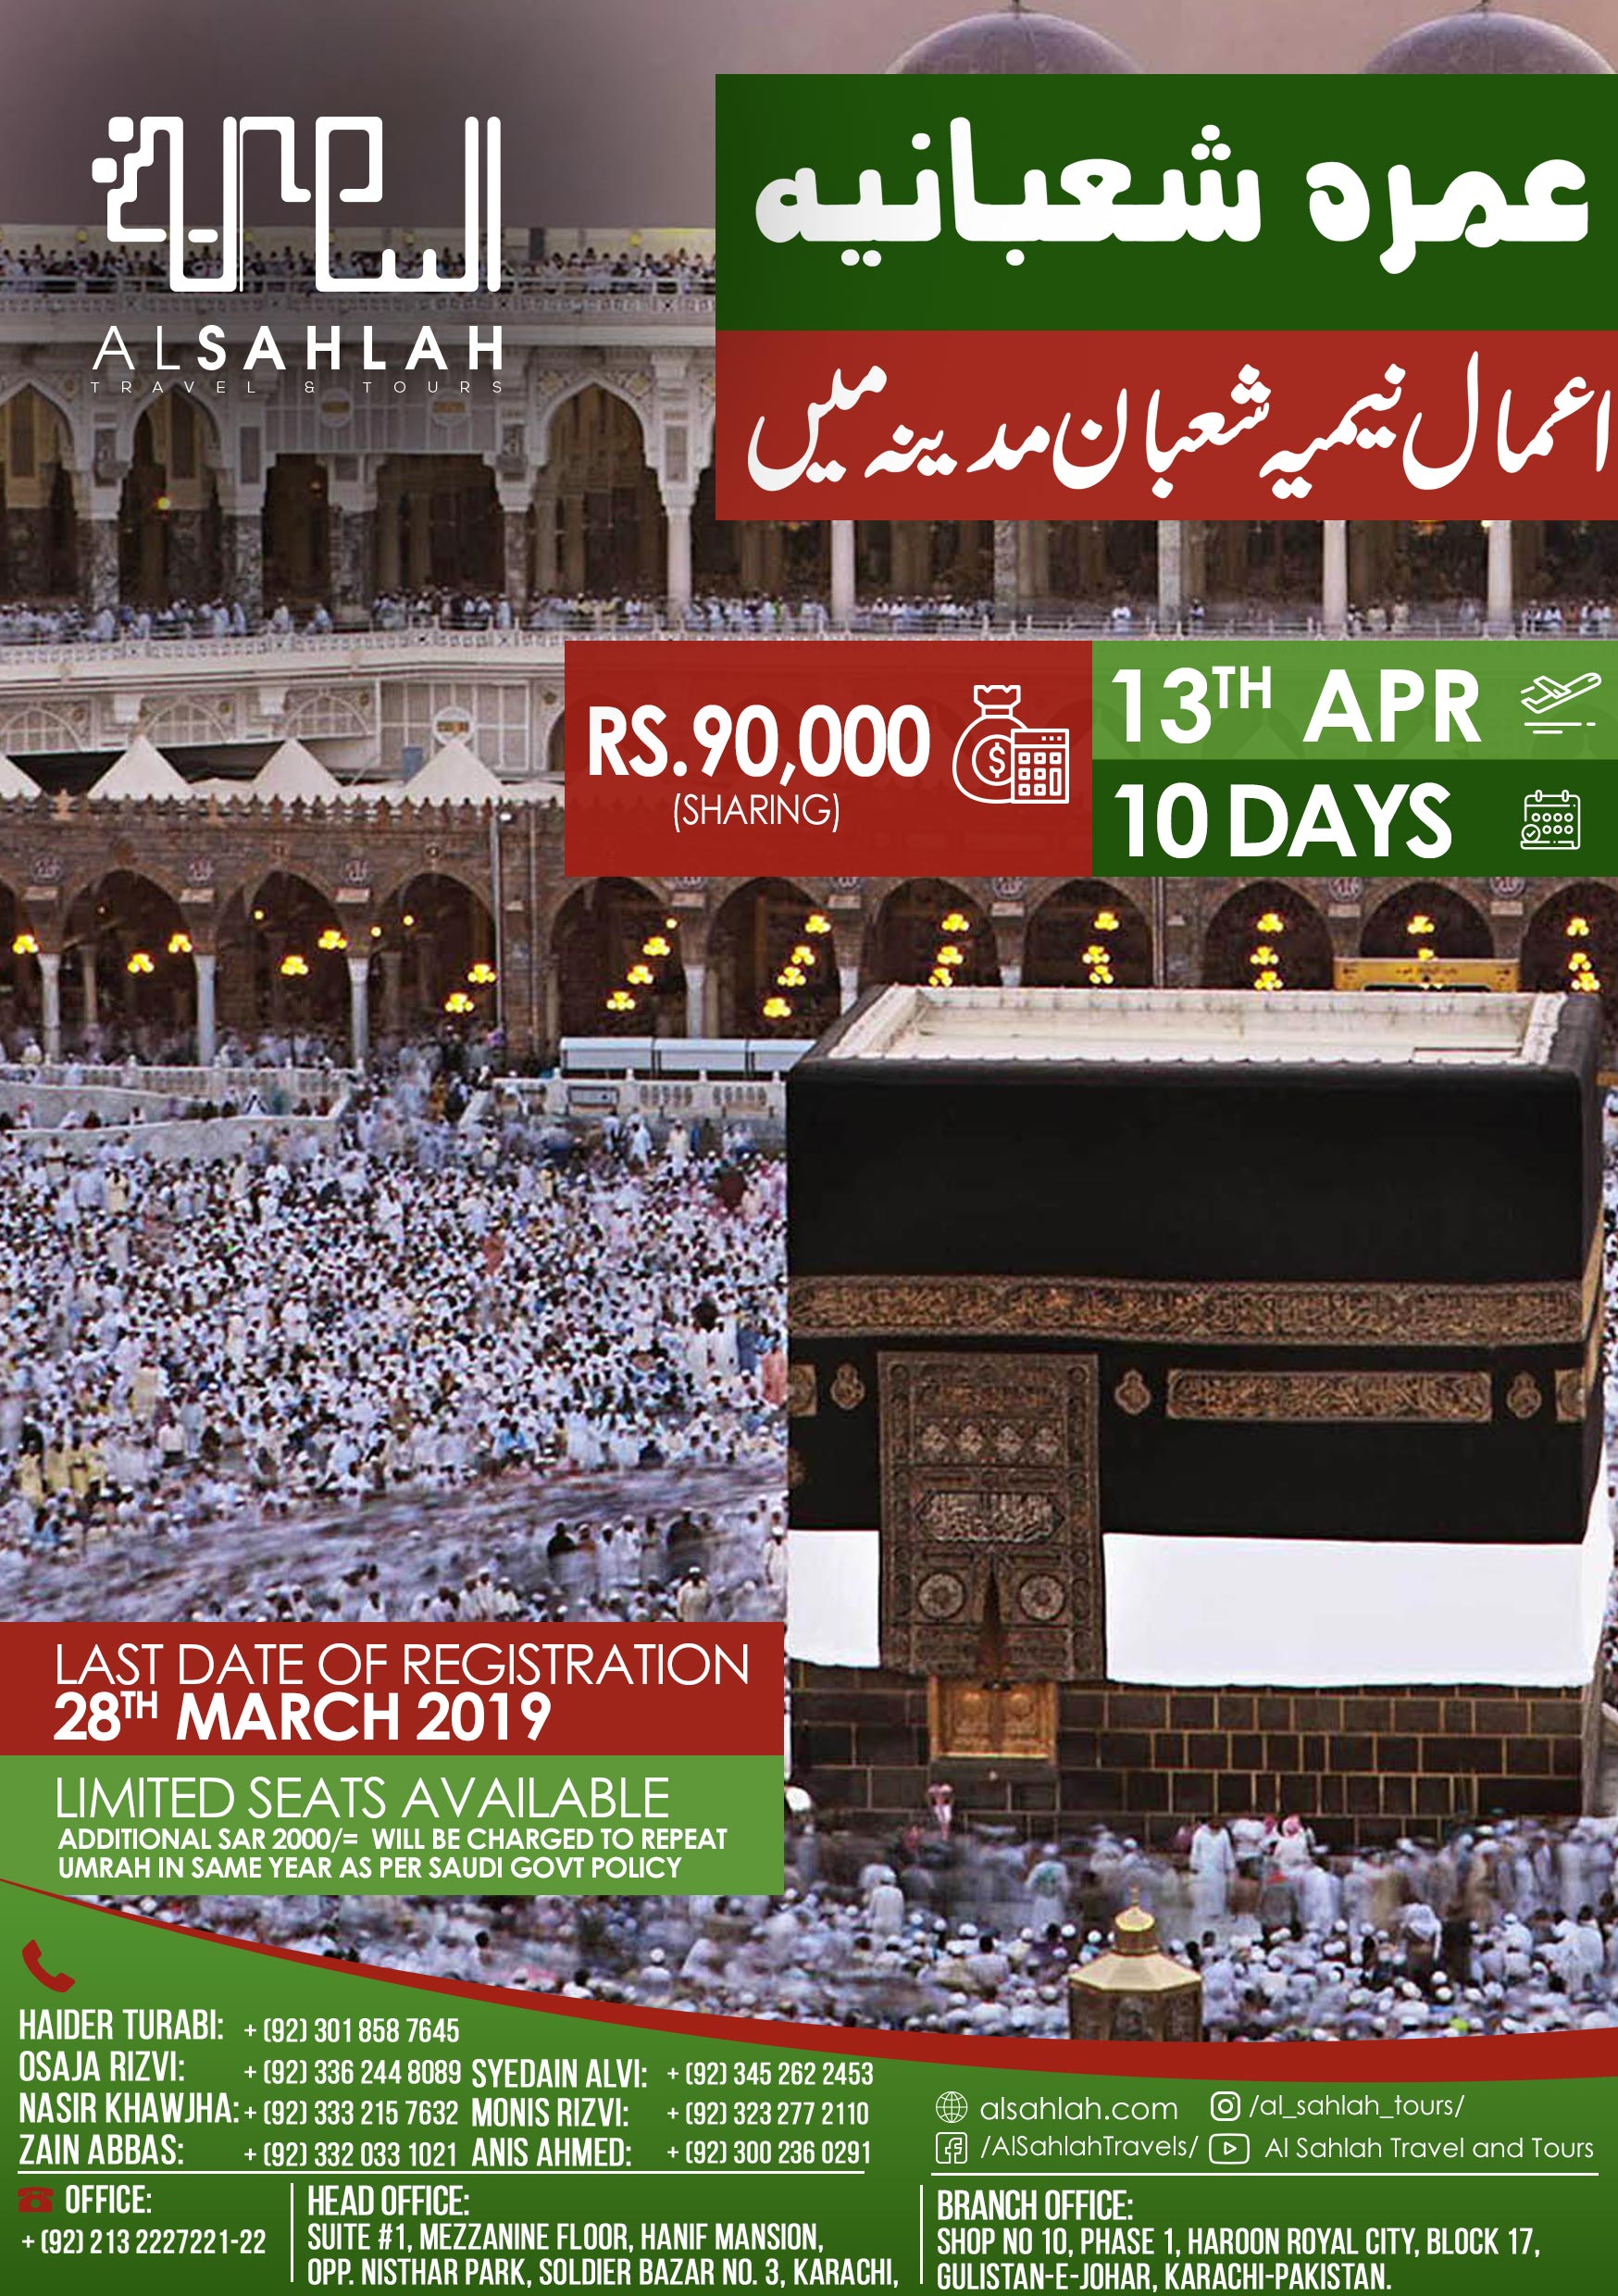 Umrah-e-Shabania- Package-Handbill